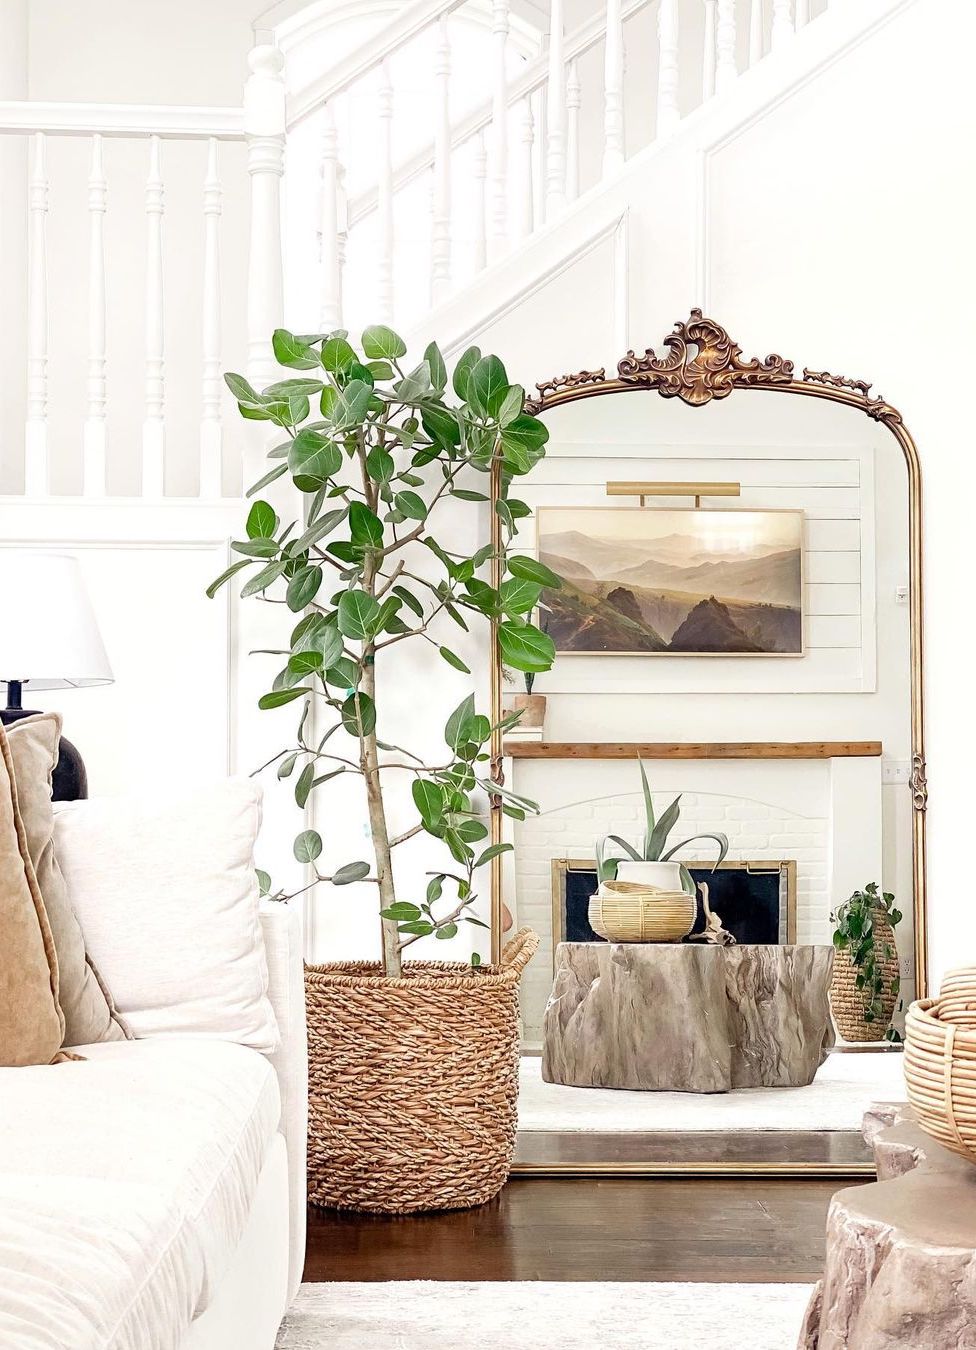 9 Best Full Length Mirrors For The Home, Floor Length Mirror In Living Room